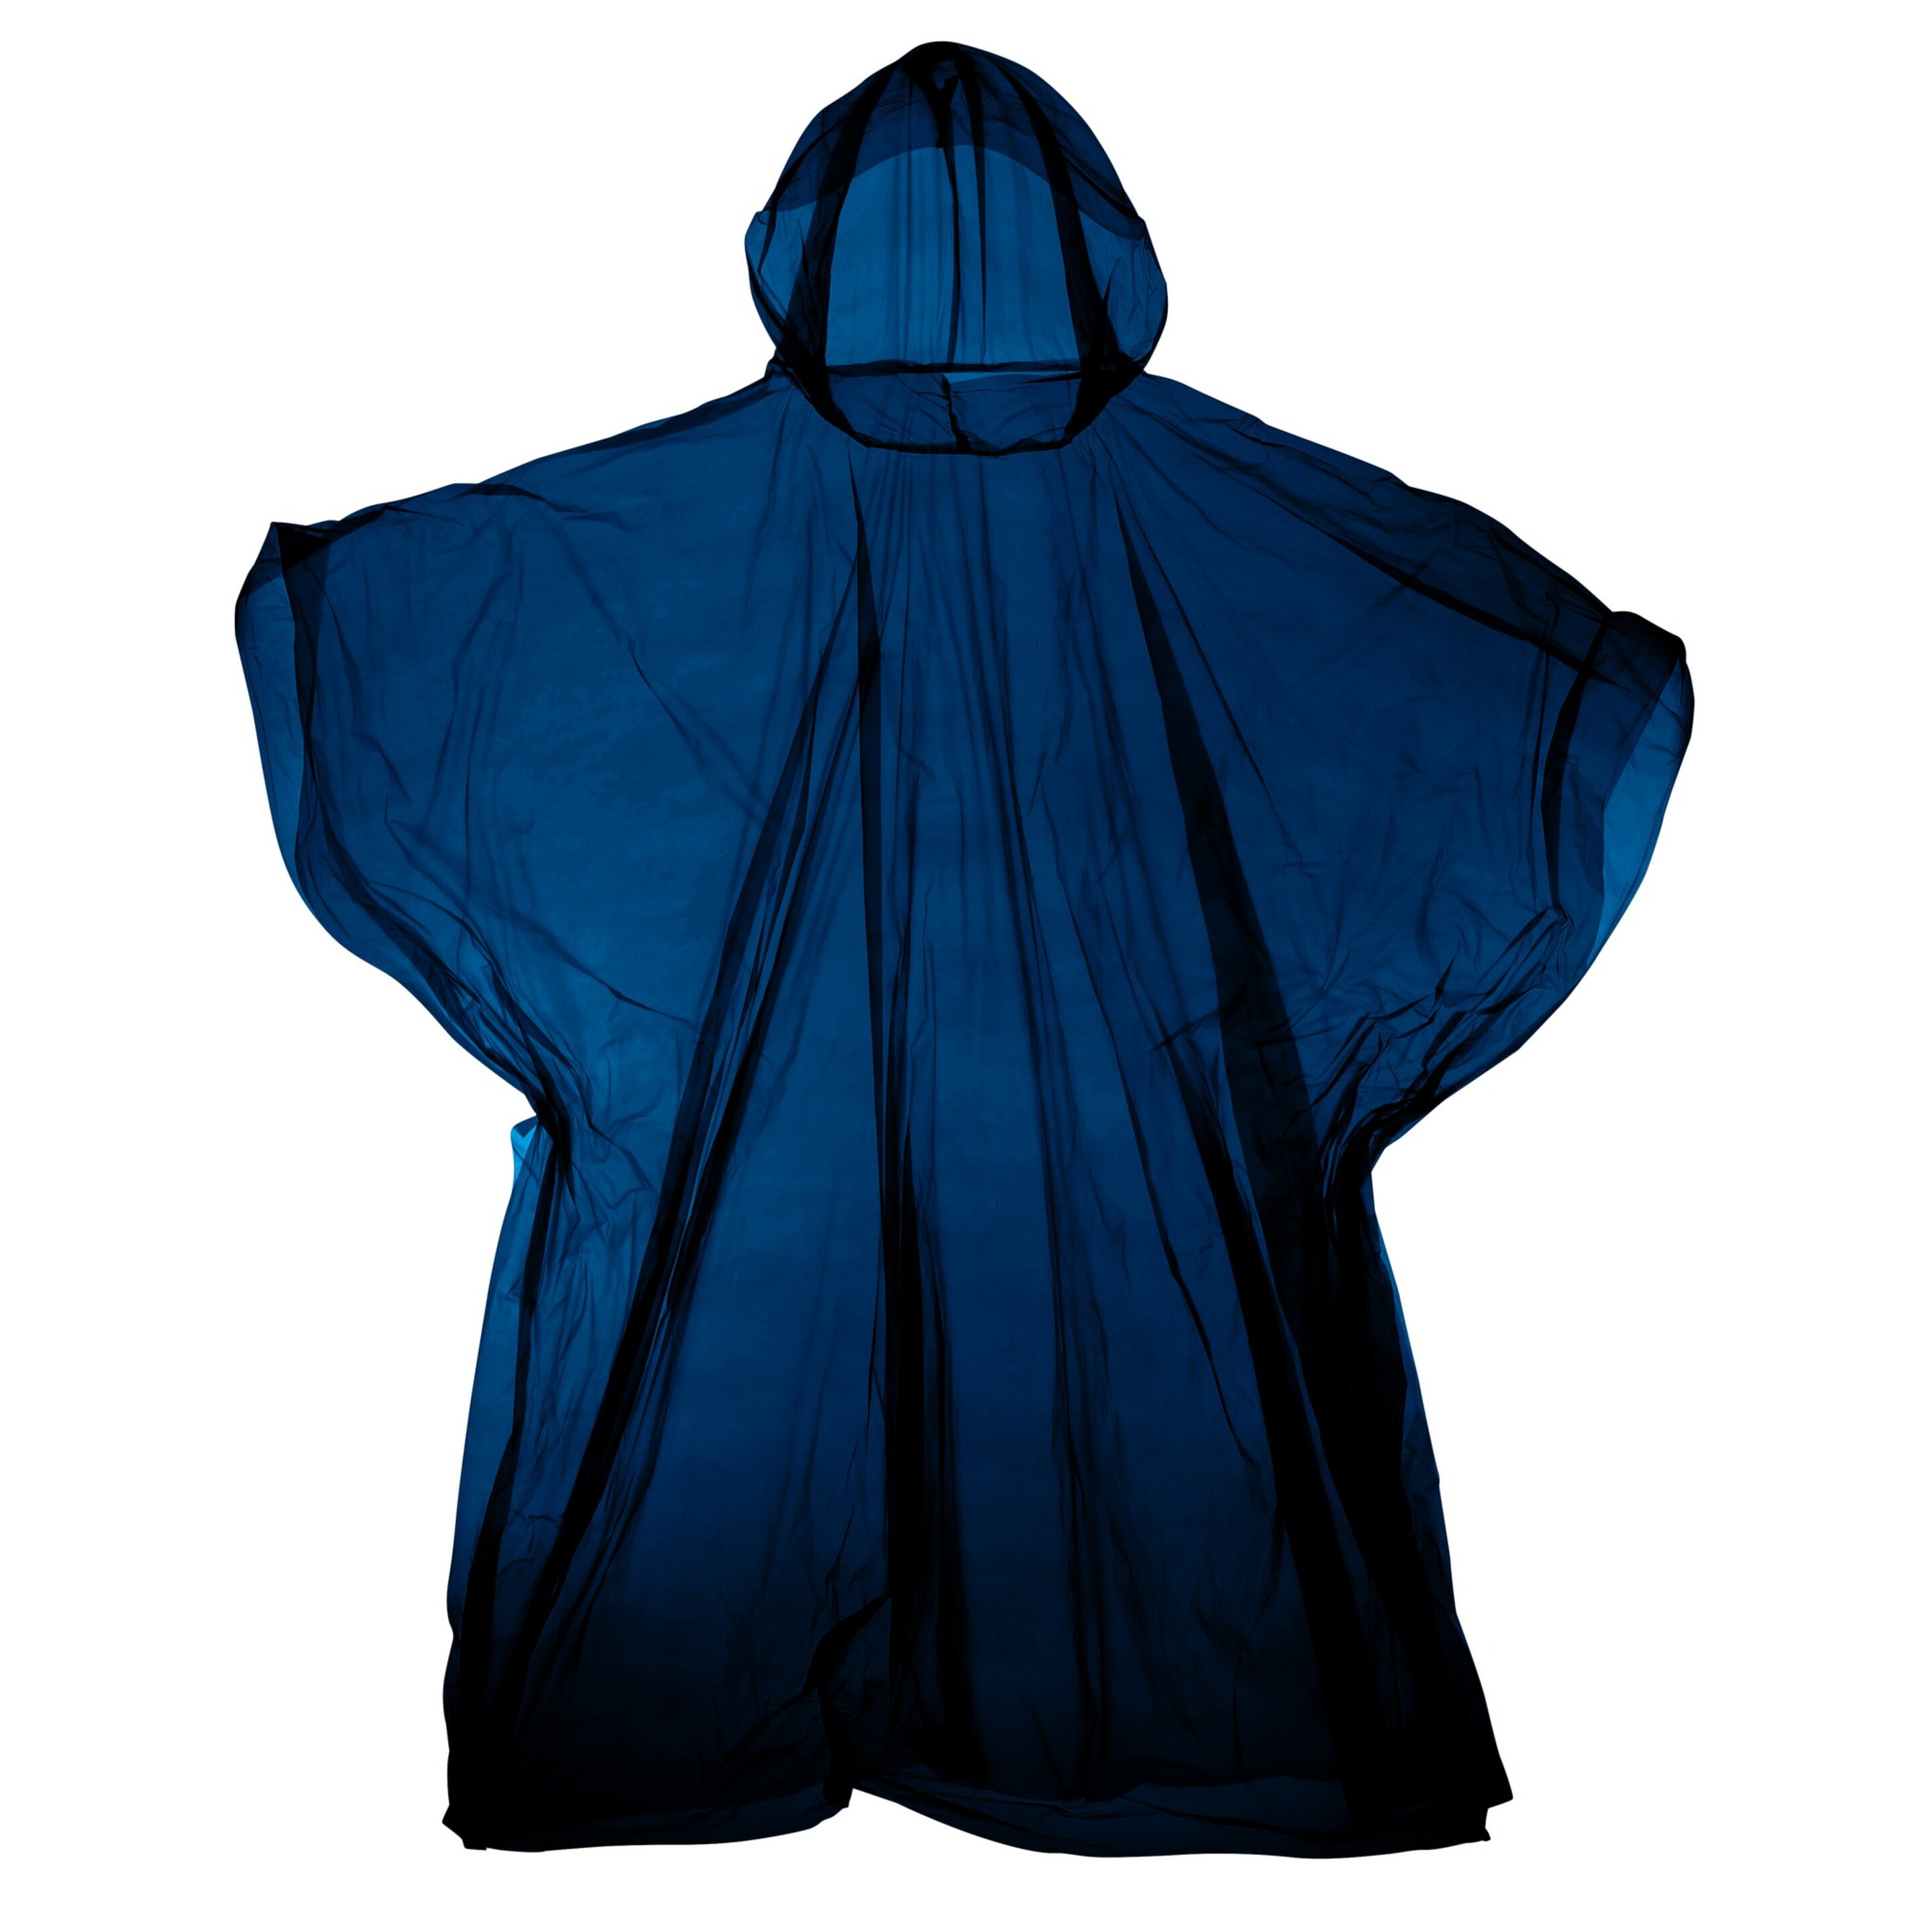 Poncho Reutilizable De Plástico Con Capucha Universal Textiles (Azul)